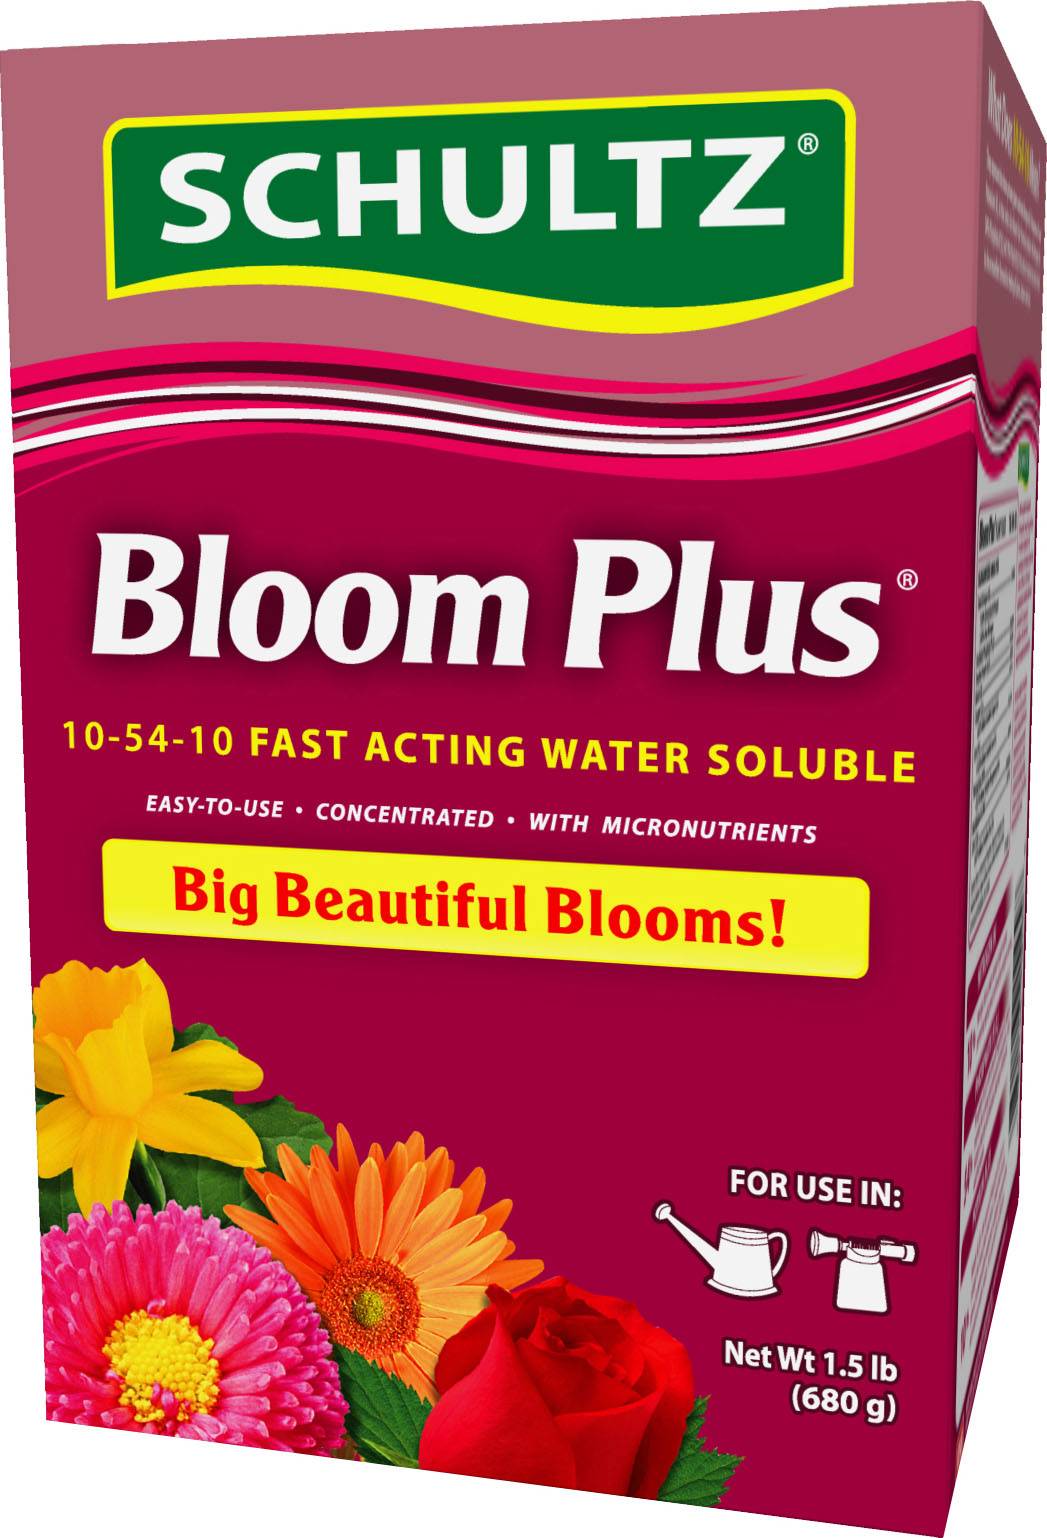 Plants plus. Удобрение Schultz Bloom Plus. Schultz Bloom Plus 10-54-10. Удобрение для орхидей Шульц. Schultz Bloom Plus 10-54-10 купить.